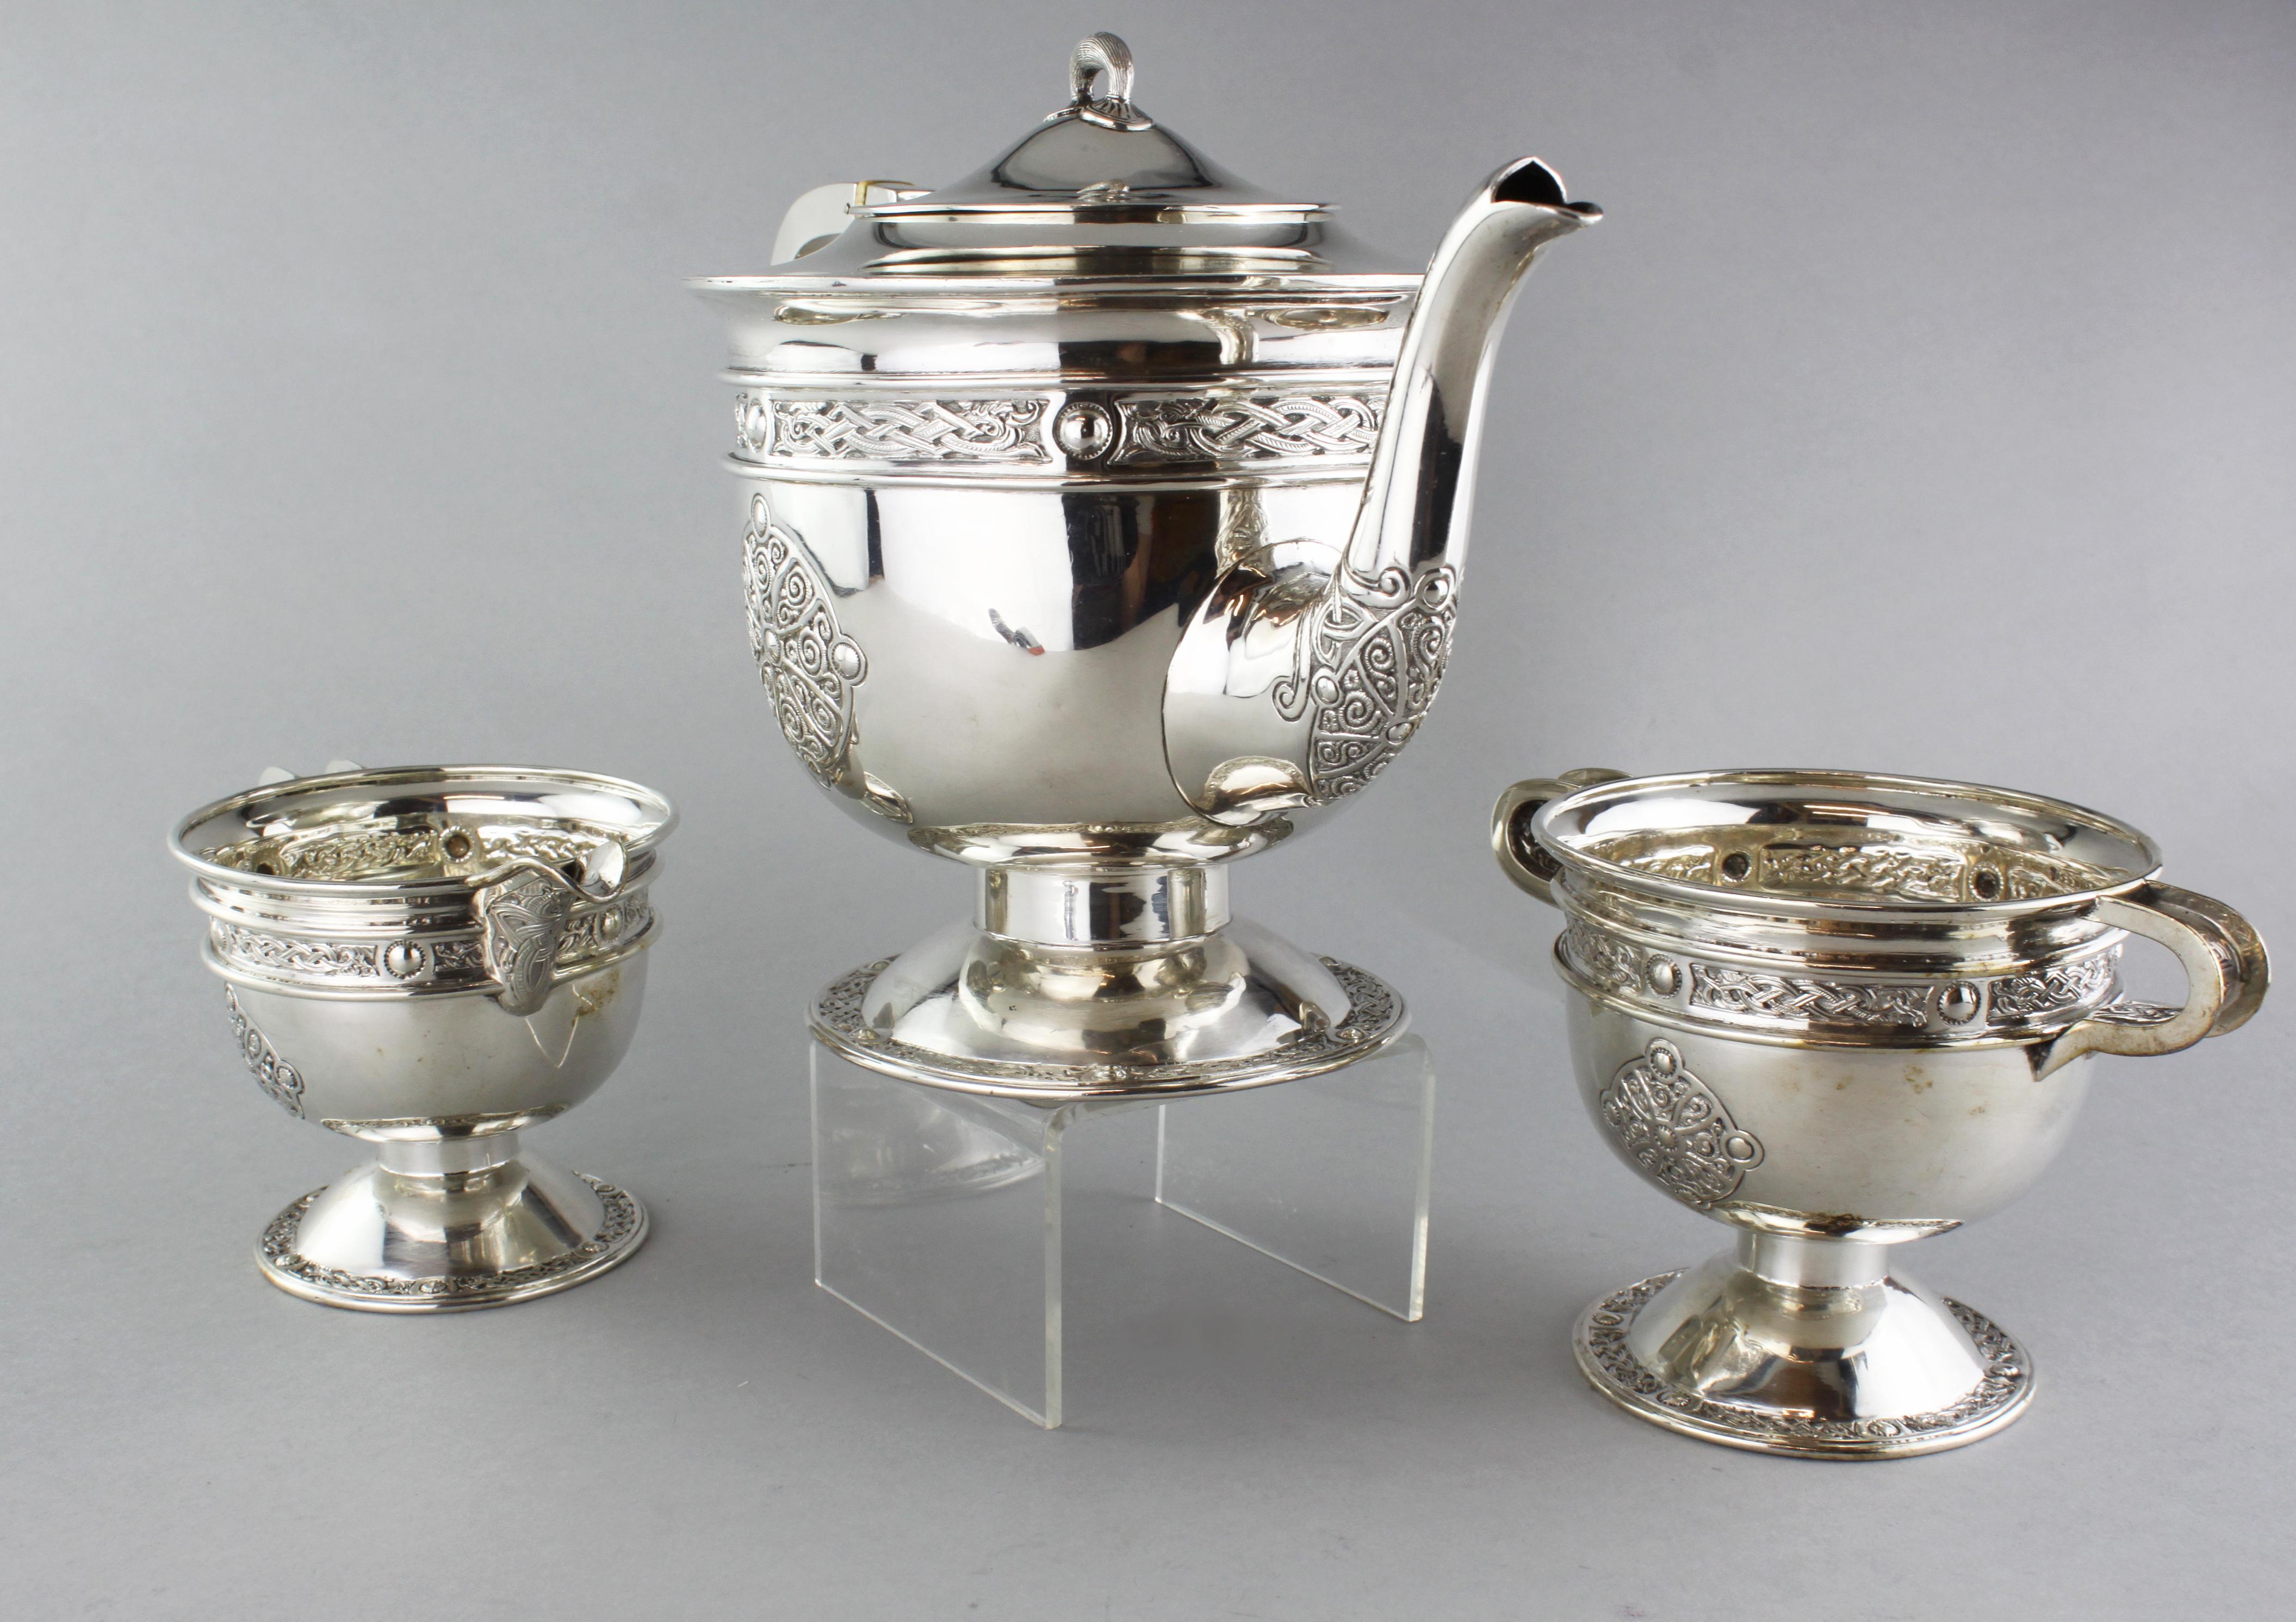 Antique sterling silver Irish three-piece tea service set
Maker: Hopkin & Hopkins
Made in Dublin, 1917
Fully hallmarked.

Dimensions:
Sugar bowl
- Weight 218g
- Base width 7.8cm
- Height 9.5cm

Teapot:
- Weight 645g
- Base width